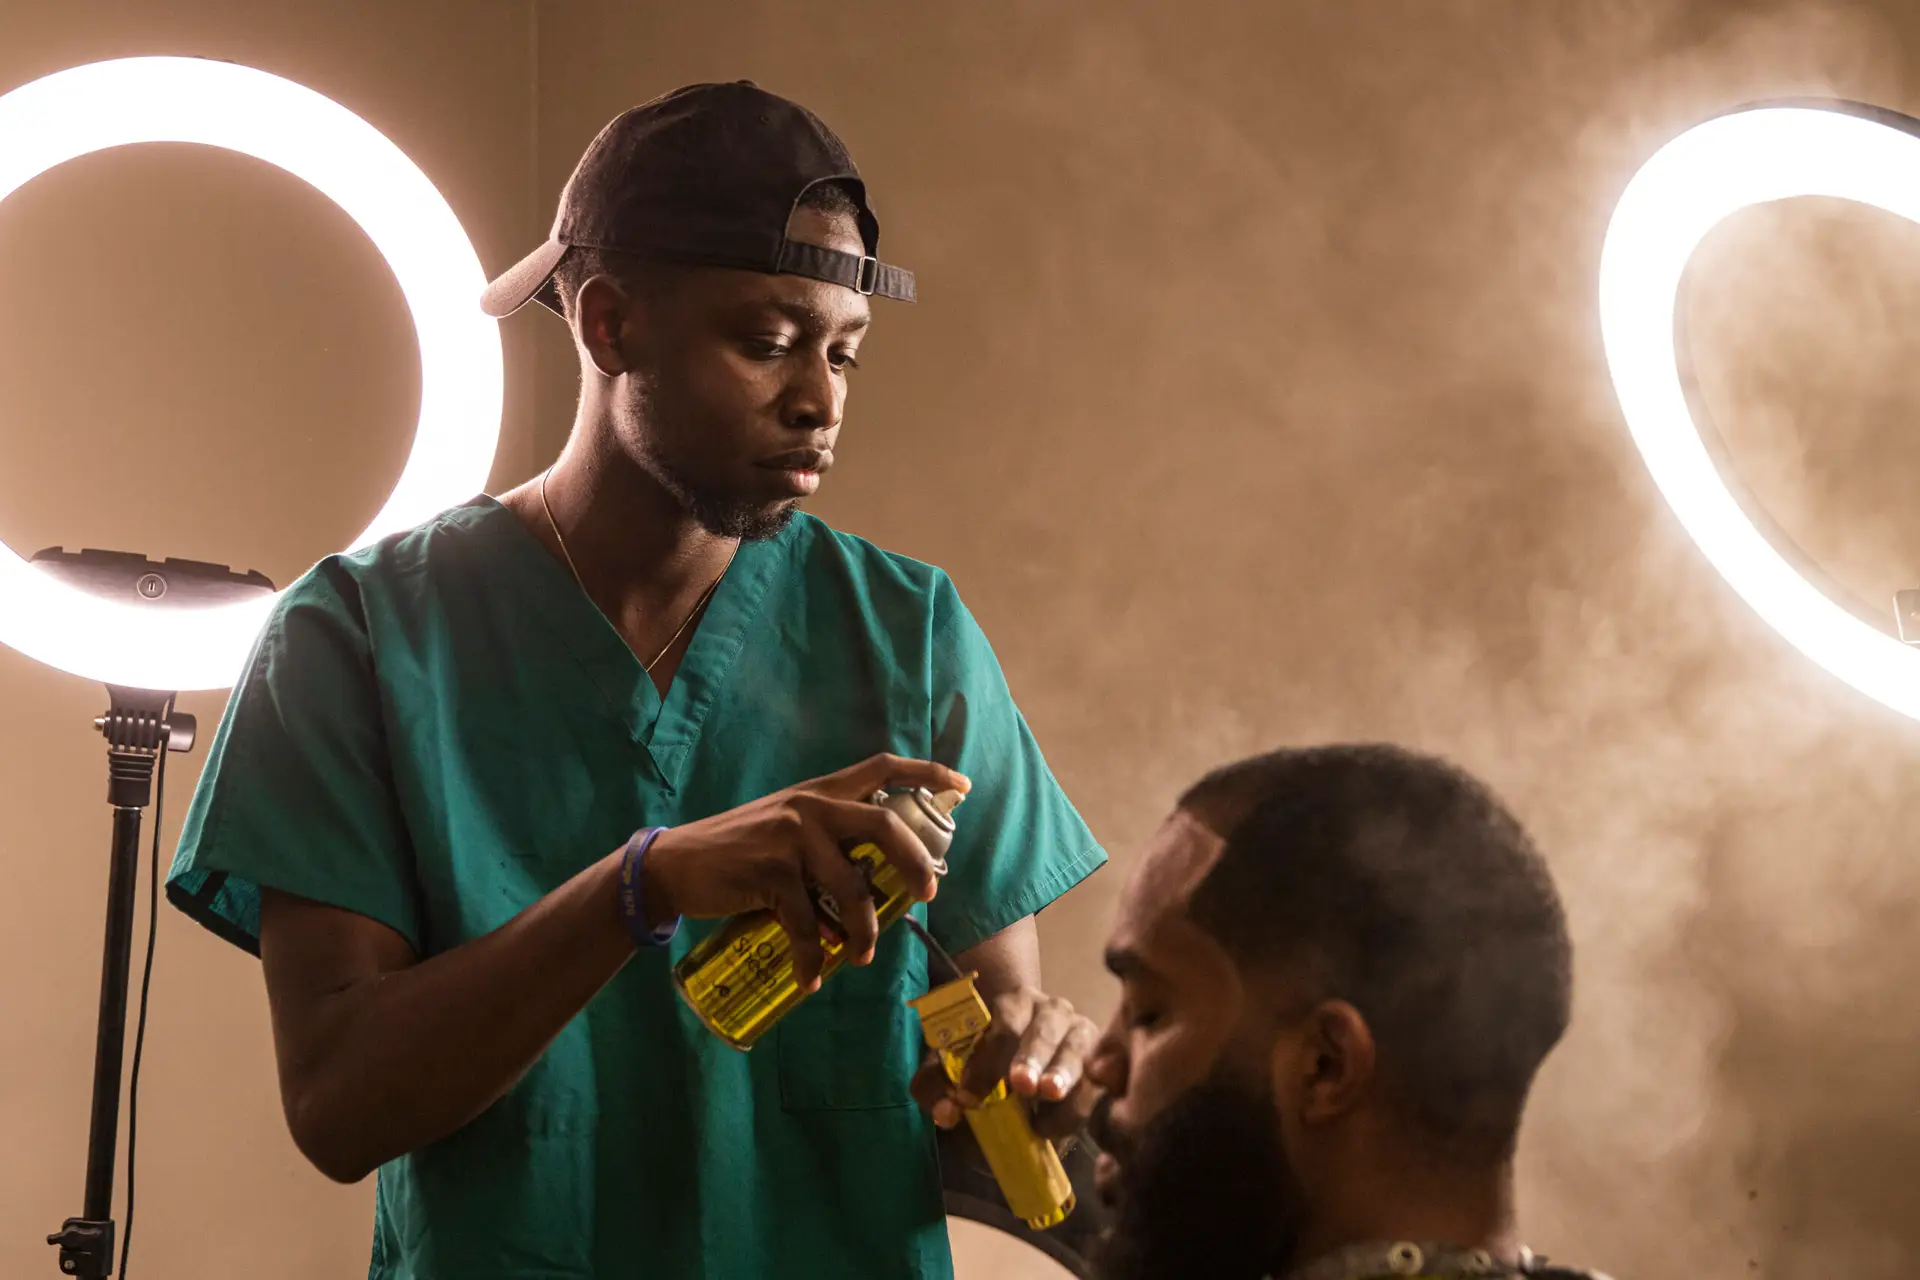 A black barber applies hair spray to a customer's head